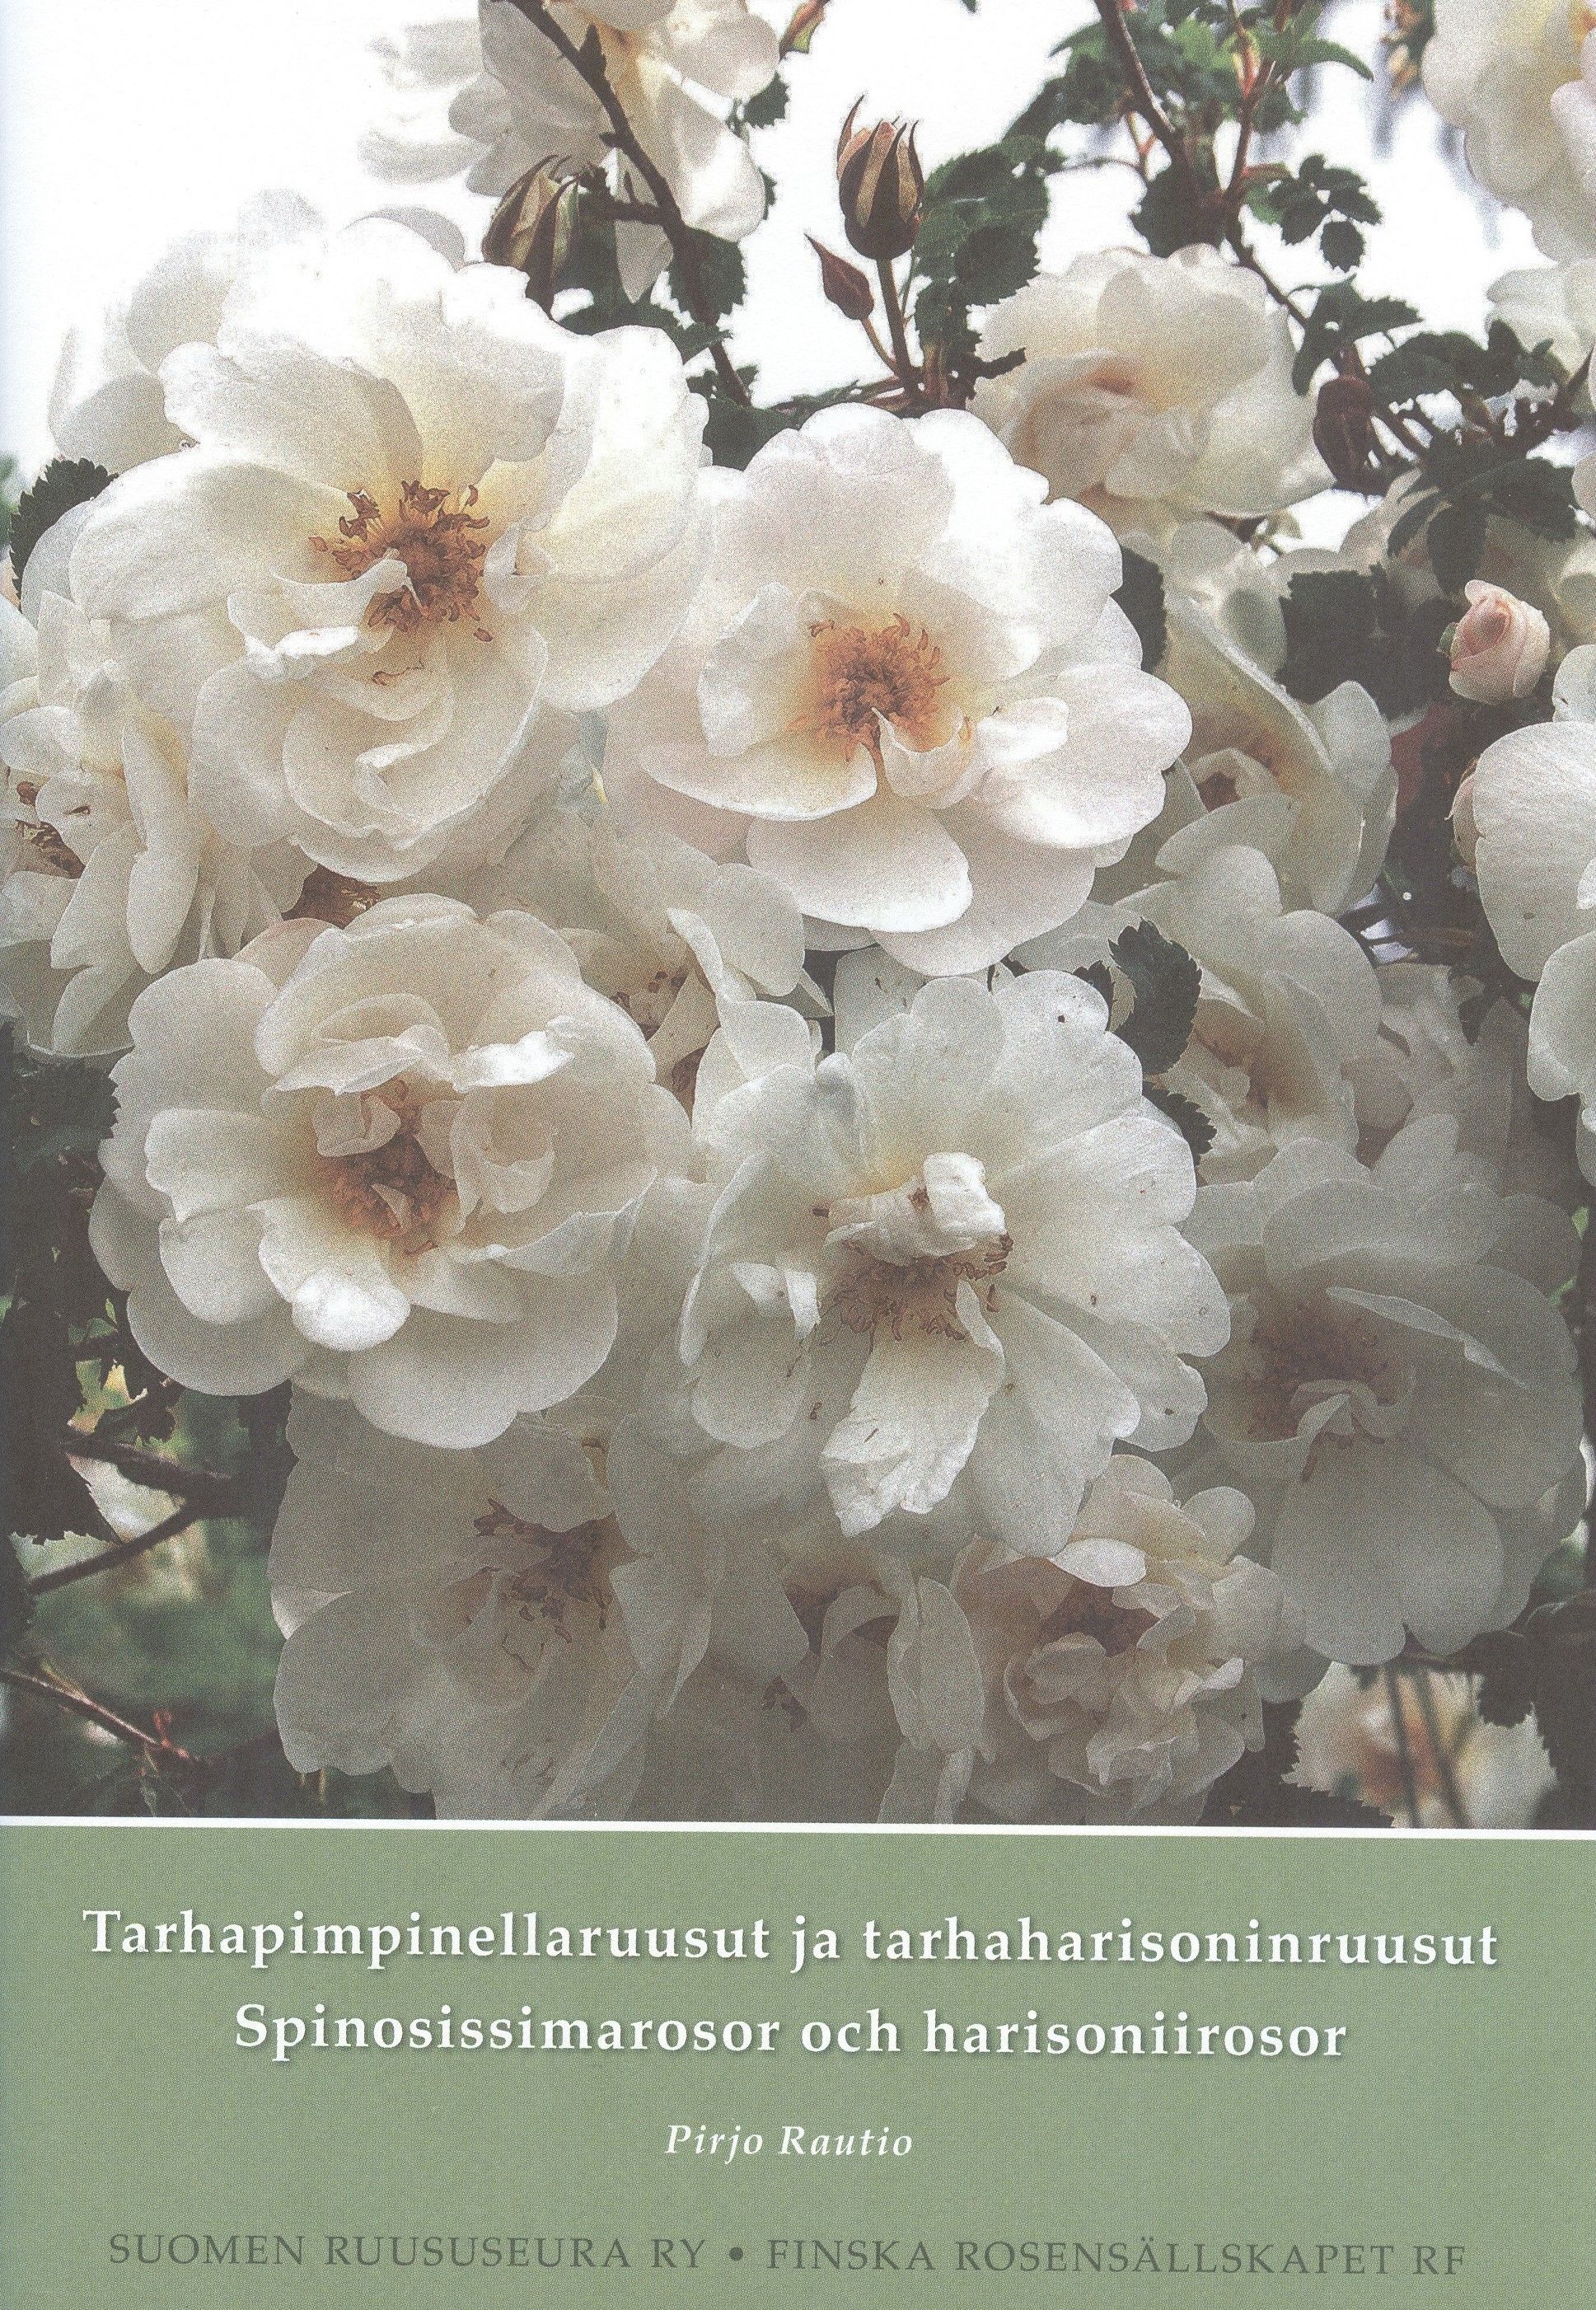 Pirjo Rautio : Tarhapimpinellaruusut ja tarhaharisoninruusut - Spinosissimarosor och harisoniirosor